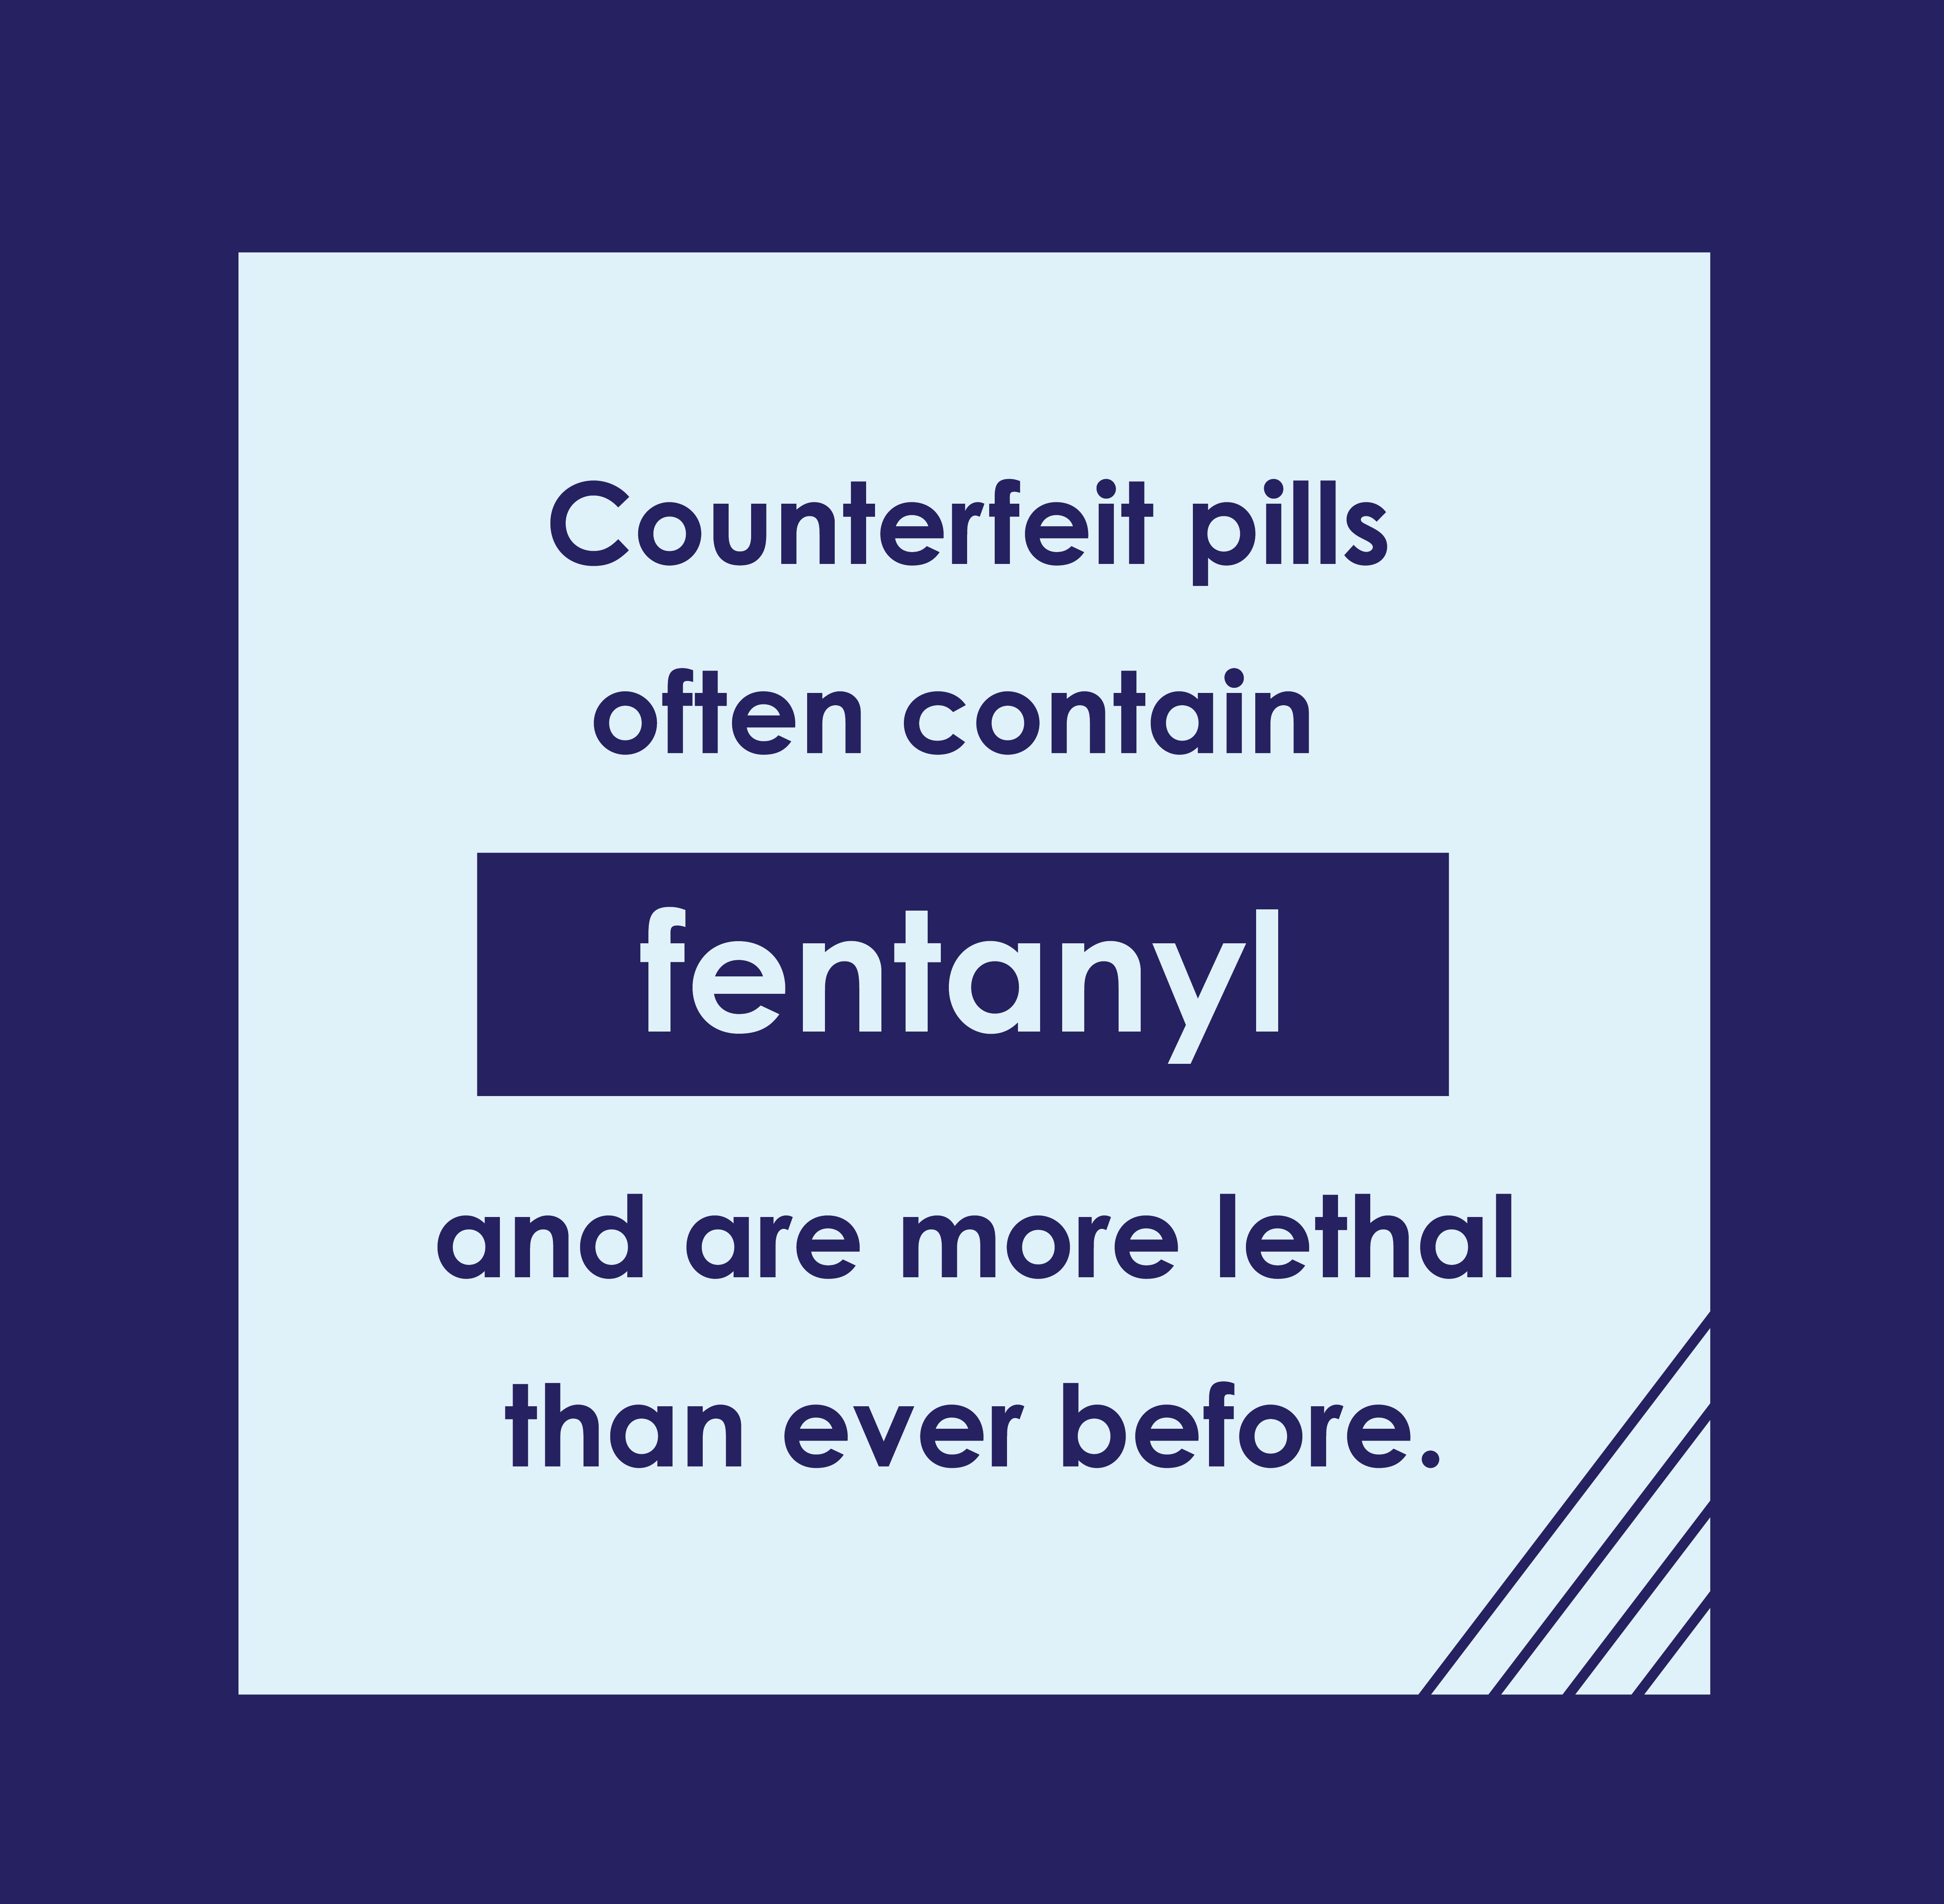 Counterfeit pills often contain Fentanyl